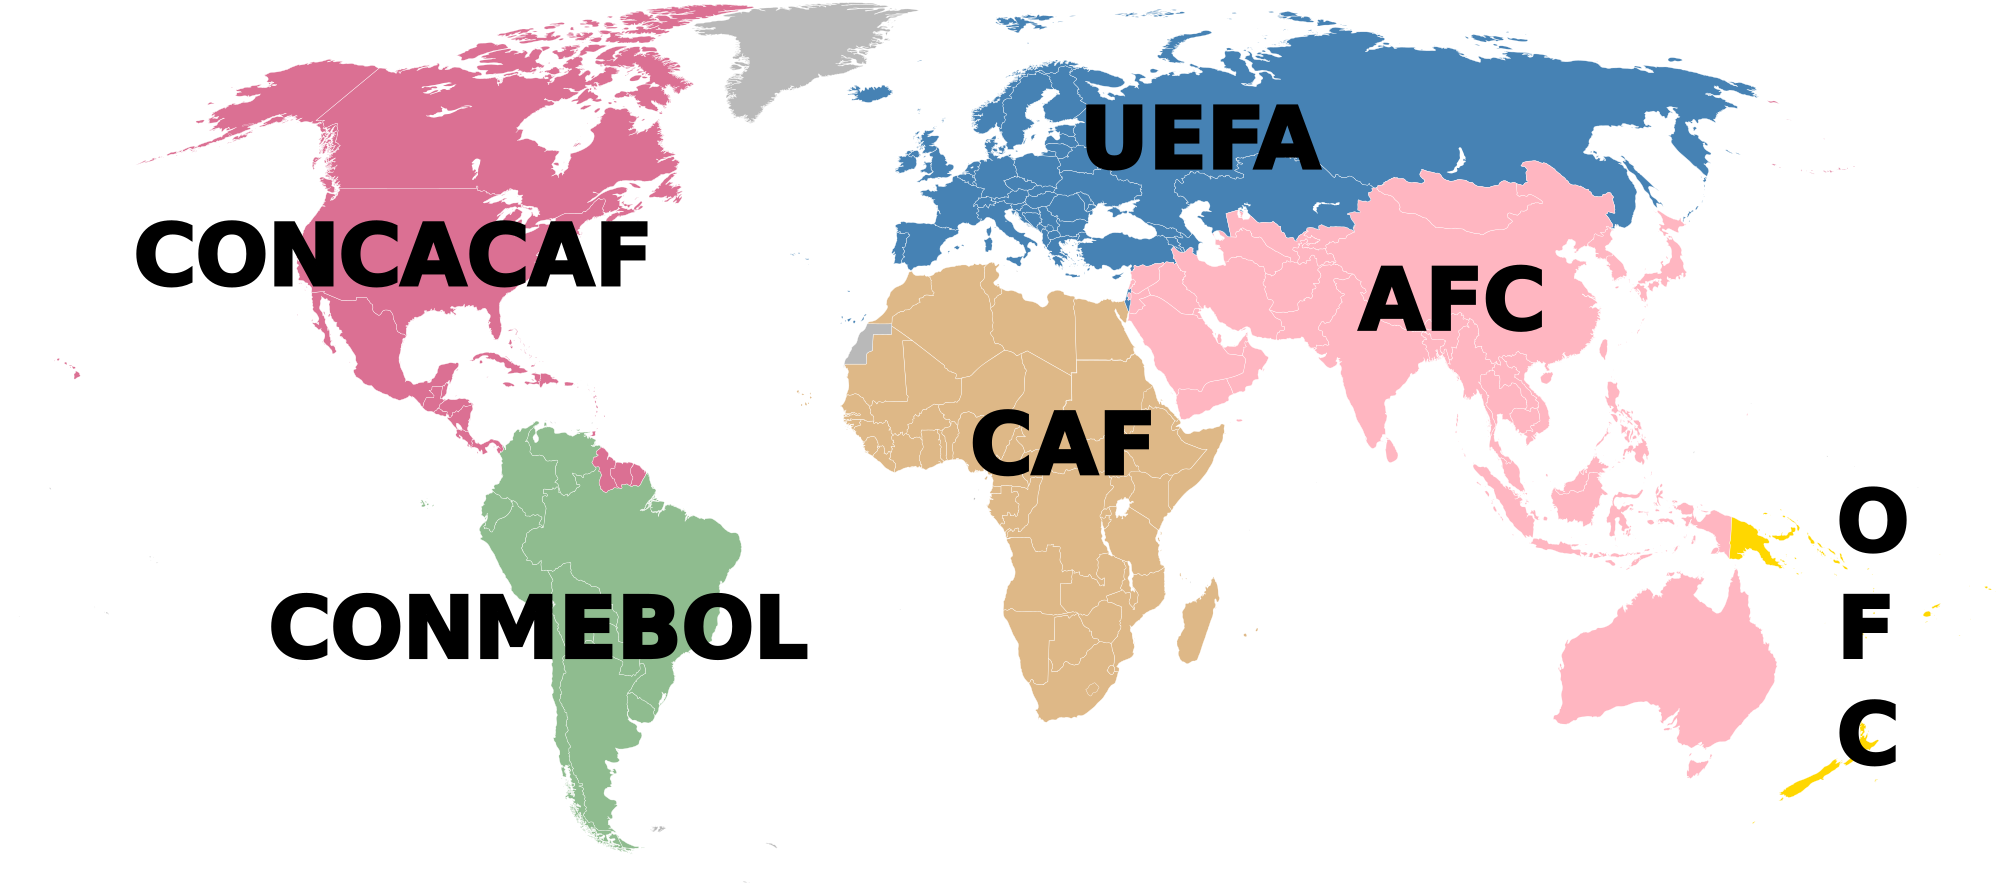 6 football federations